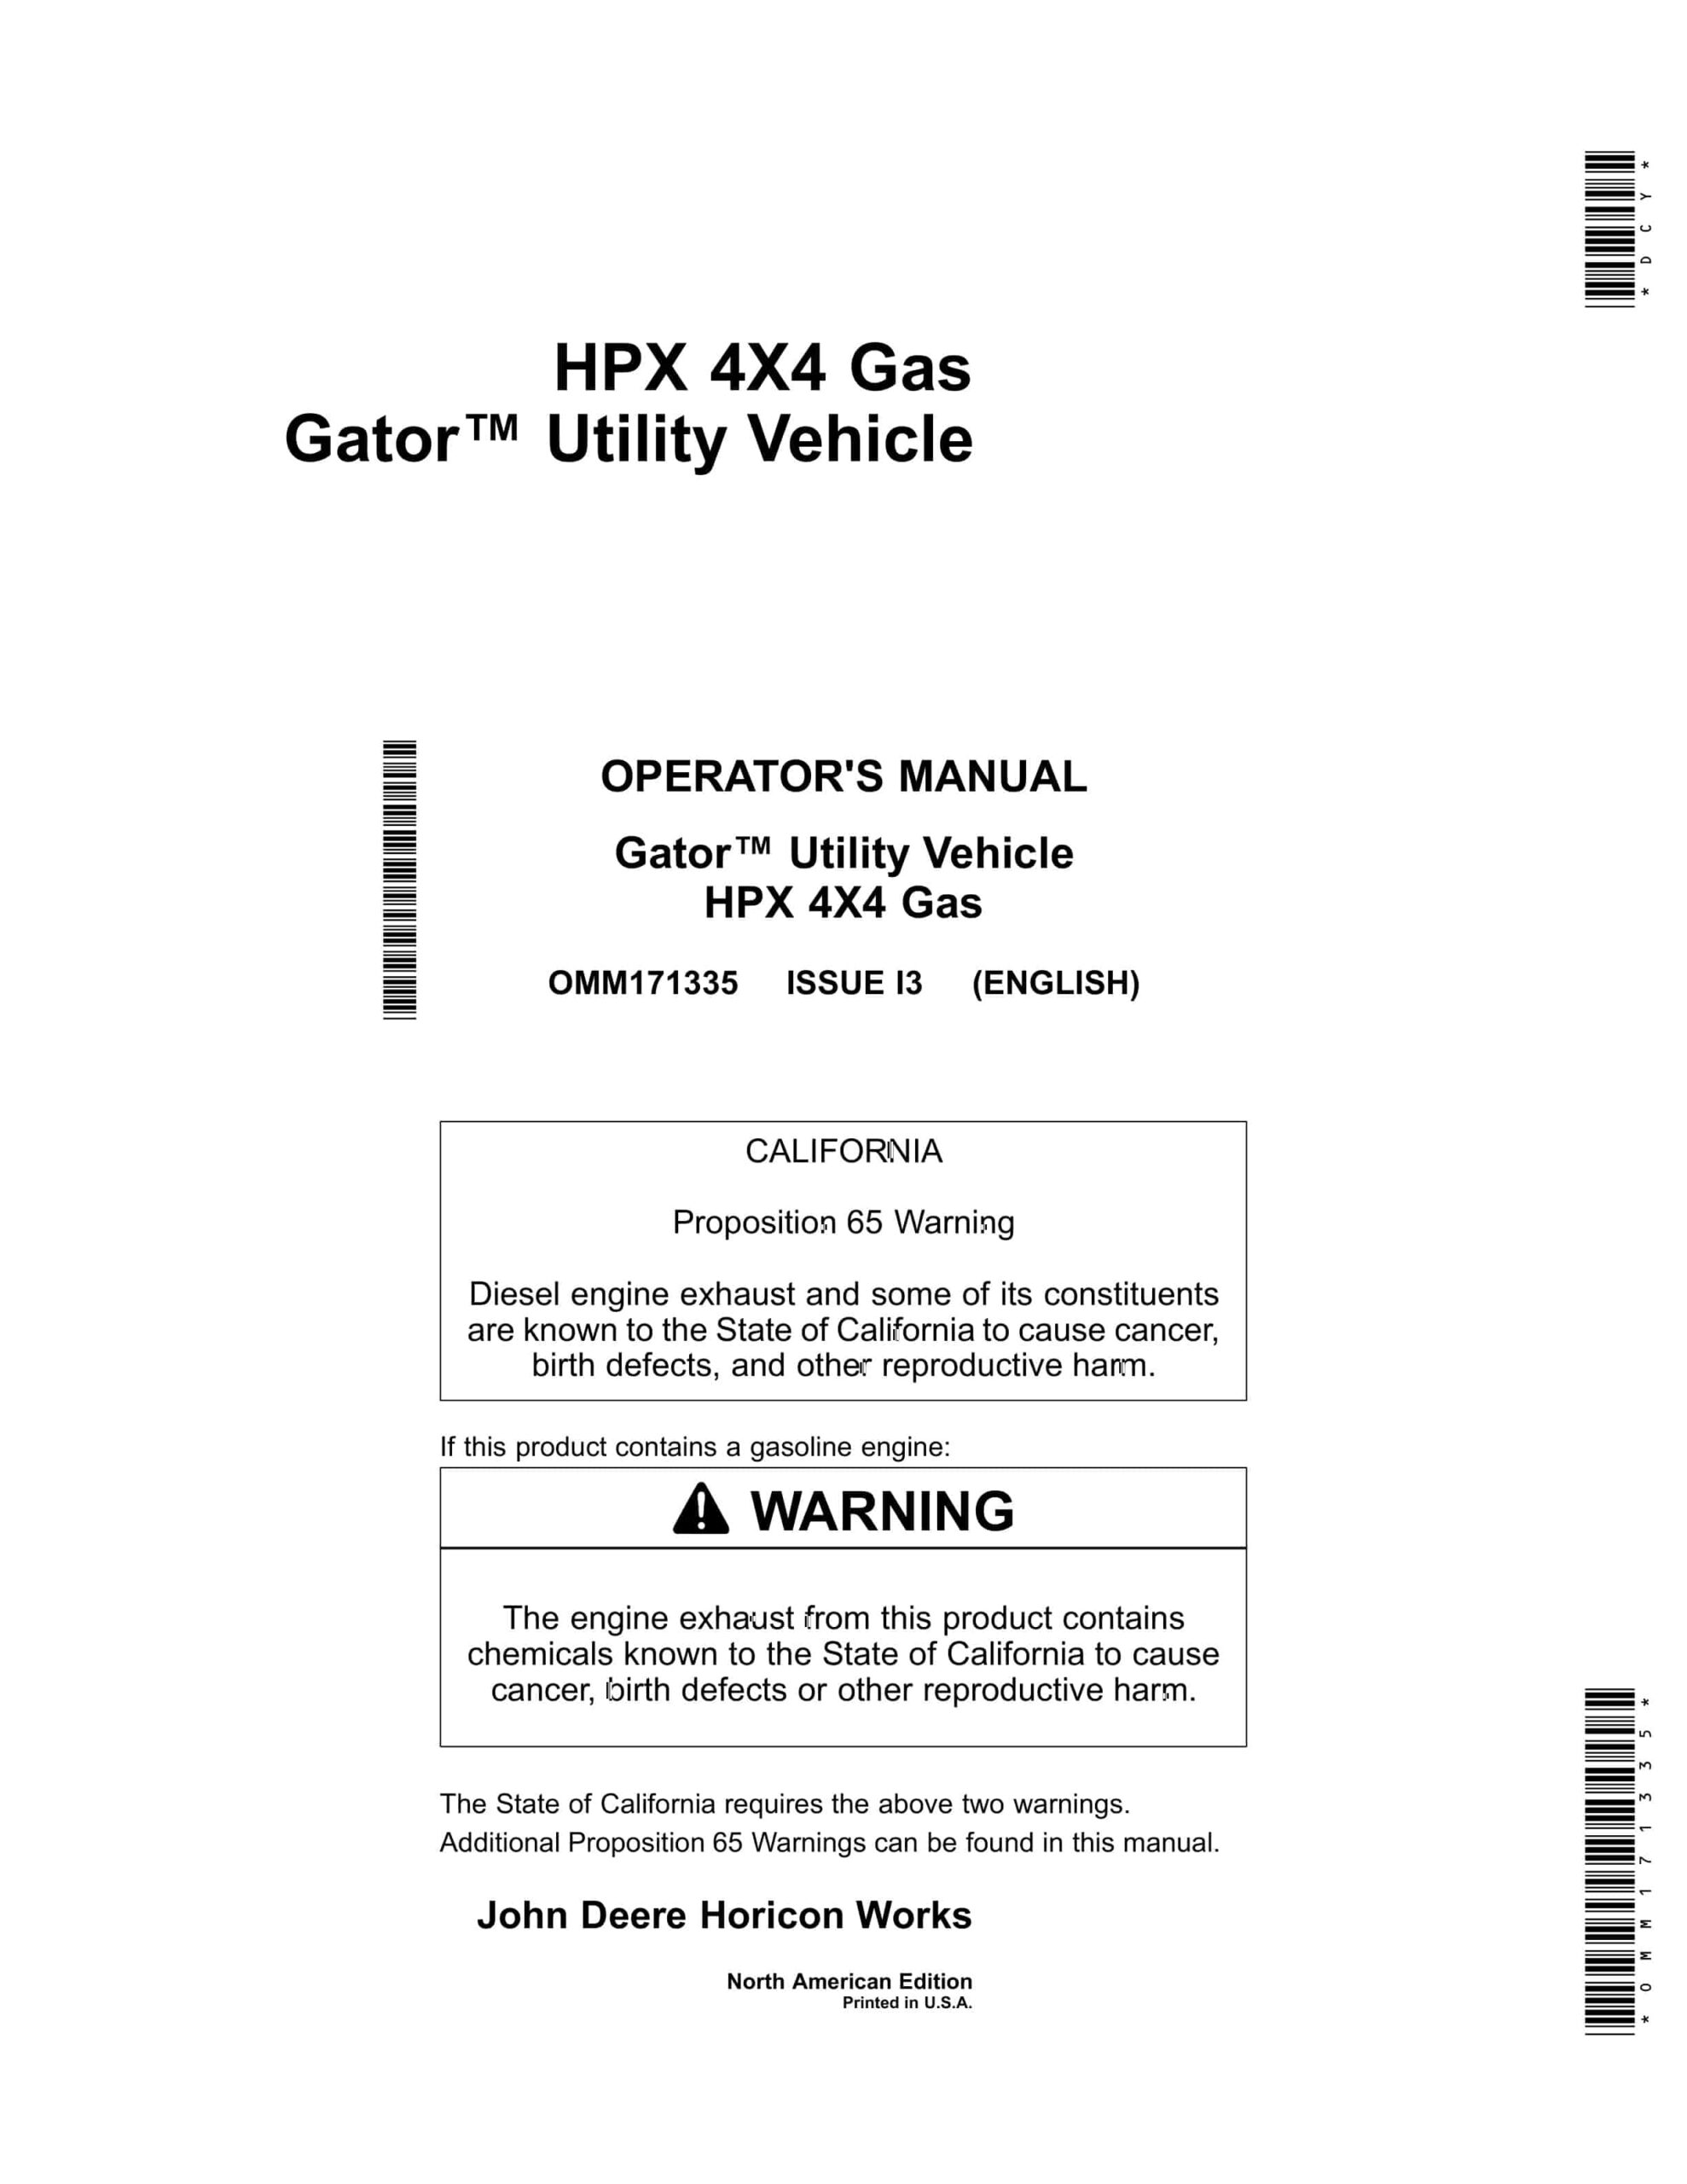 John Deere HPX 4X4 Gas Gator Utility Vehicles Operator Manual OMM171335-1